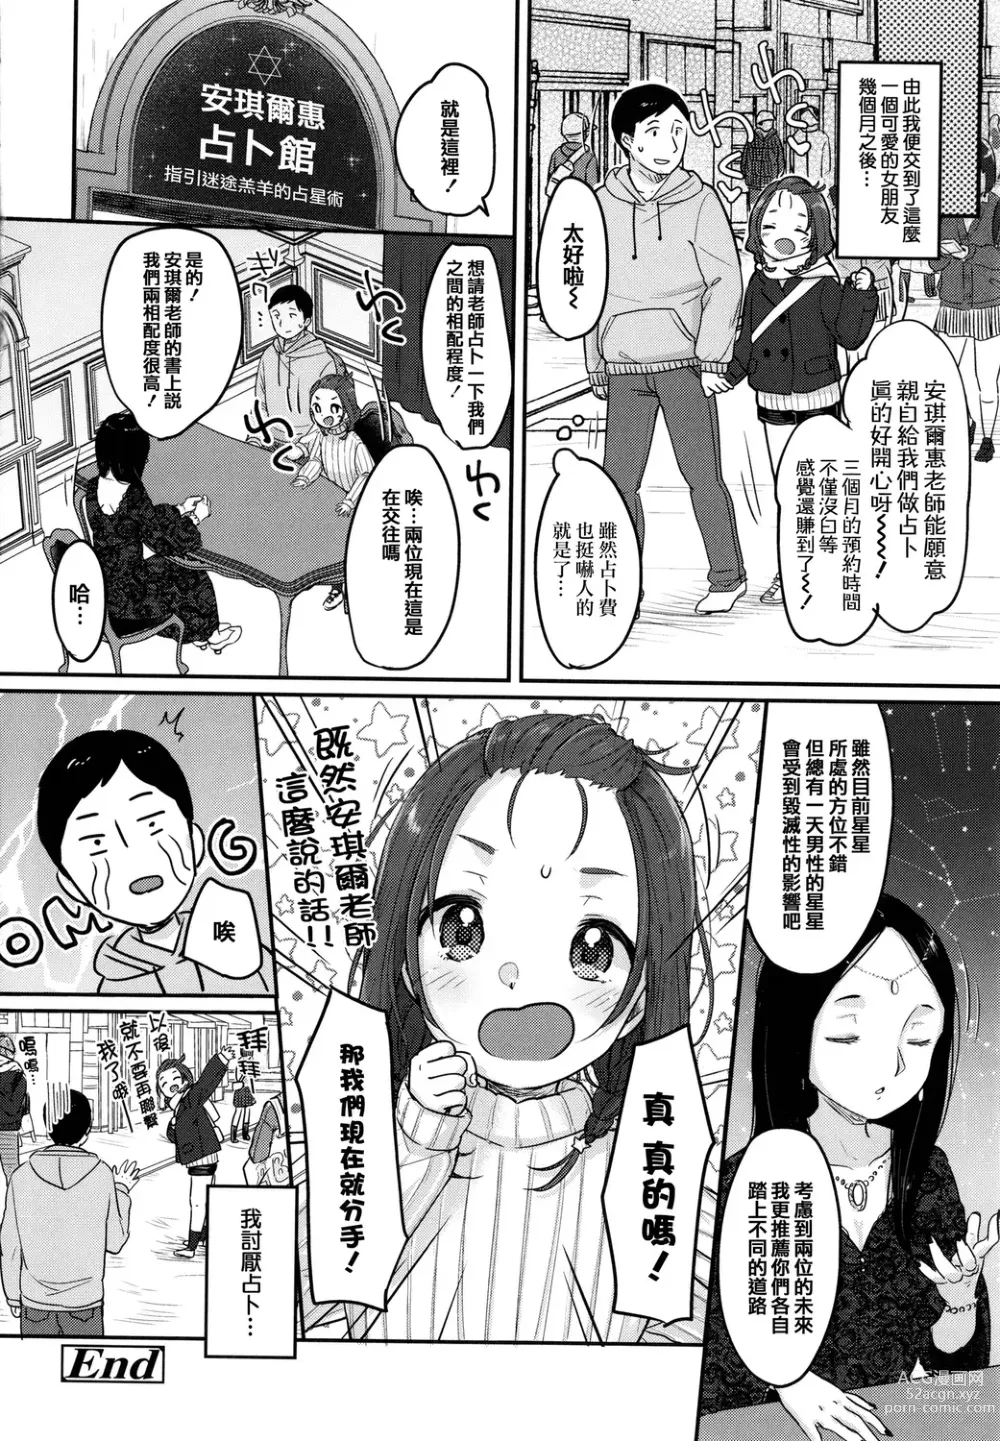 Page 192 of manga Chuco Chuco Muchu (decensored)